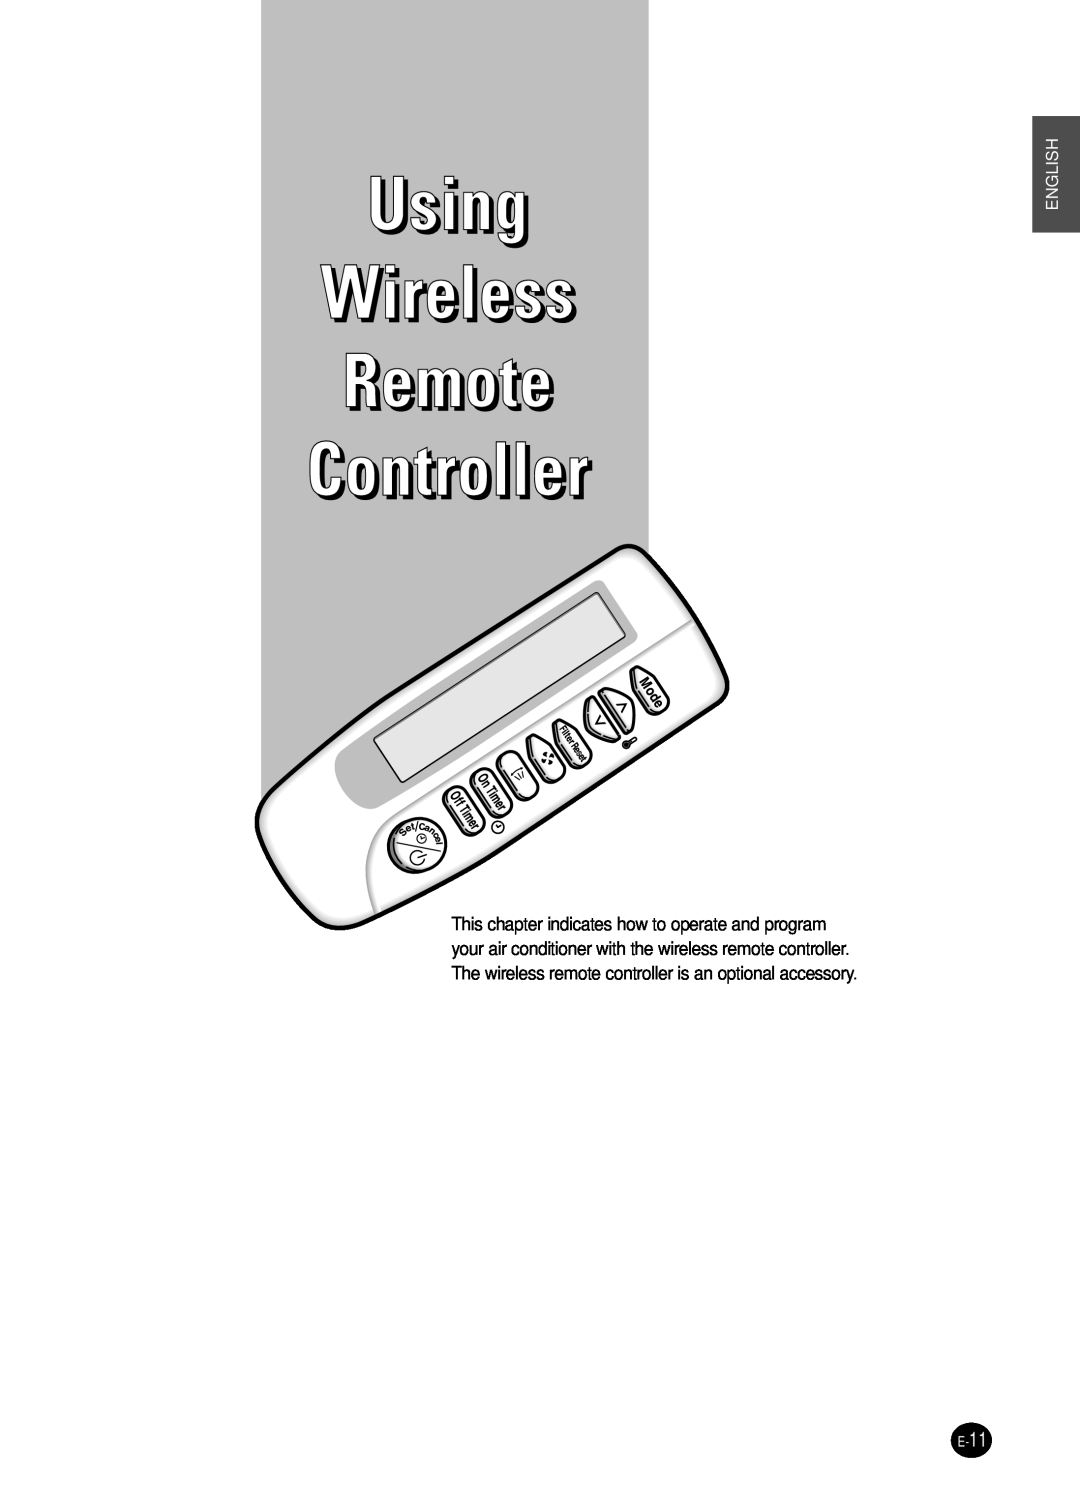 Samsung AFPCC052CA0 manuel dutilisation Using Wireless Remote Controller, English, E-11 